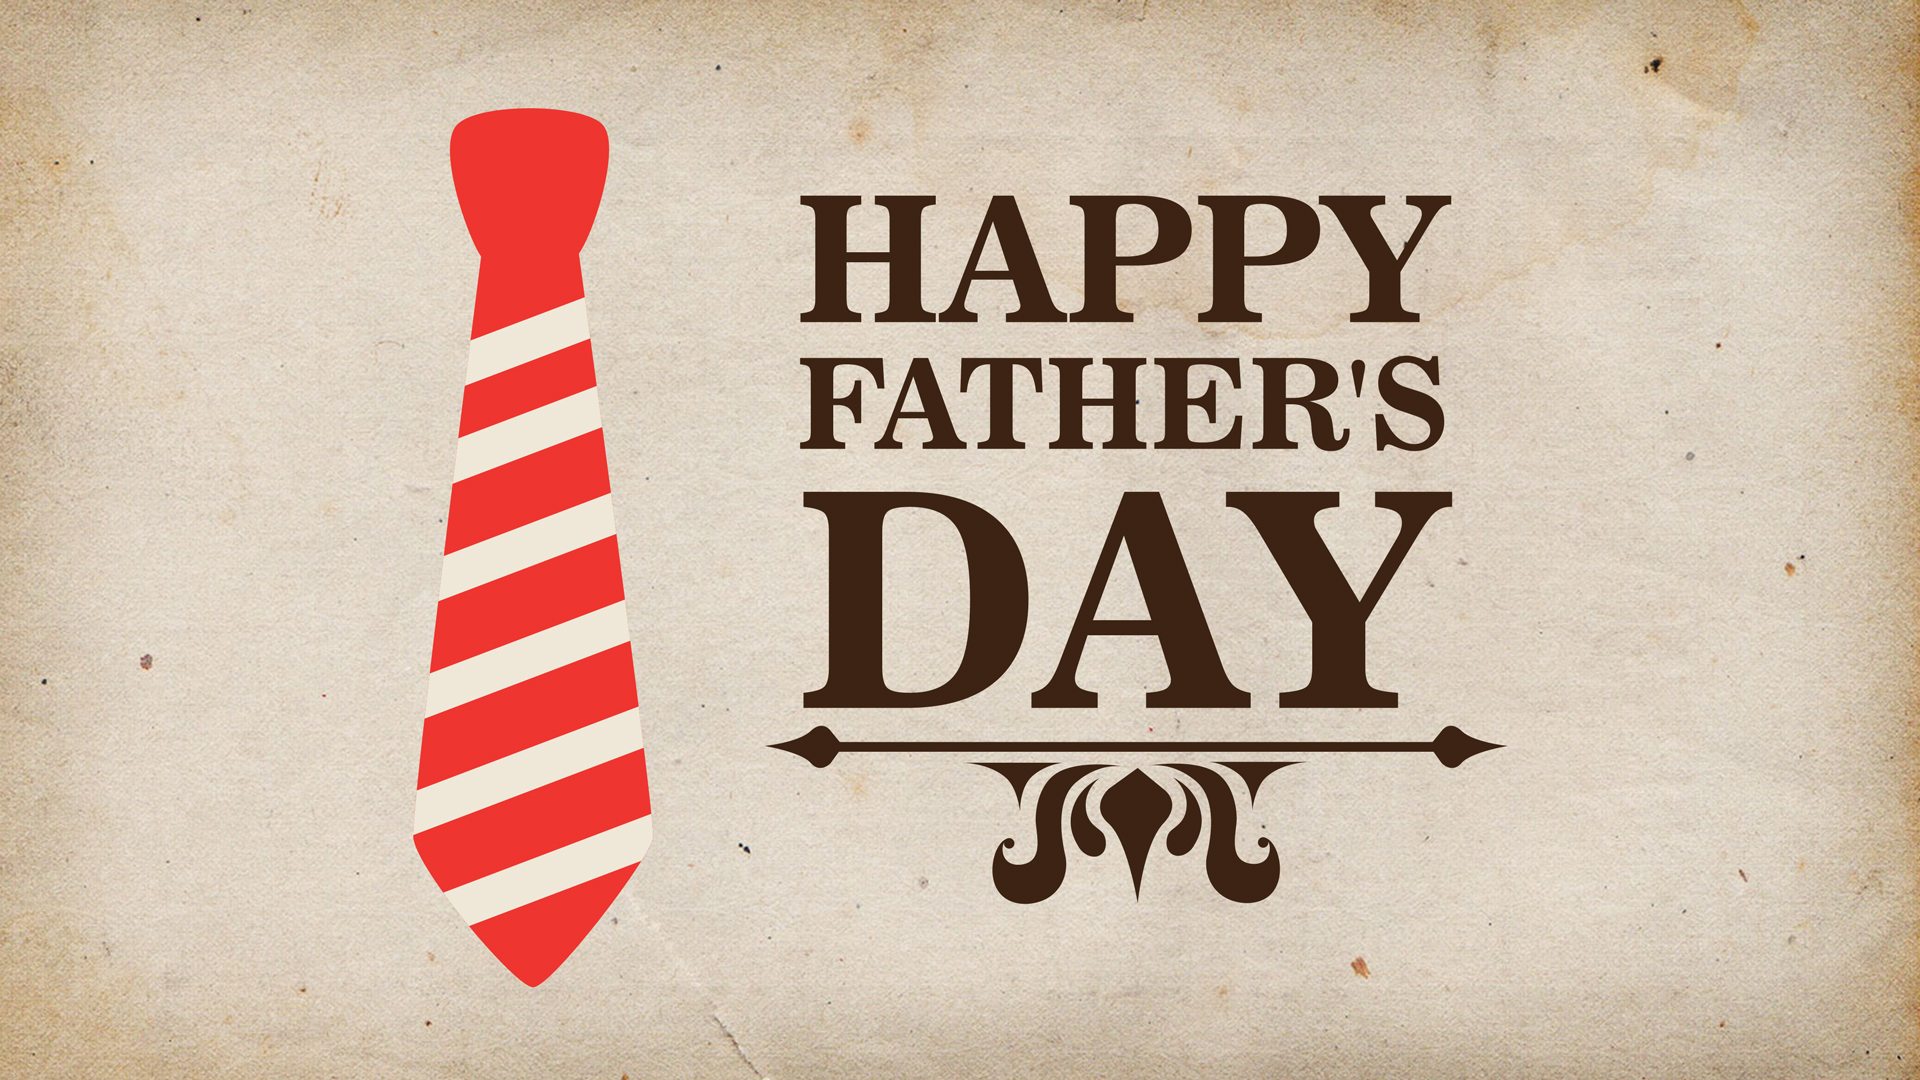 Father's Day, Father's Day 2019, Father's Day gifts, financial freedom